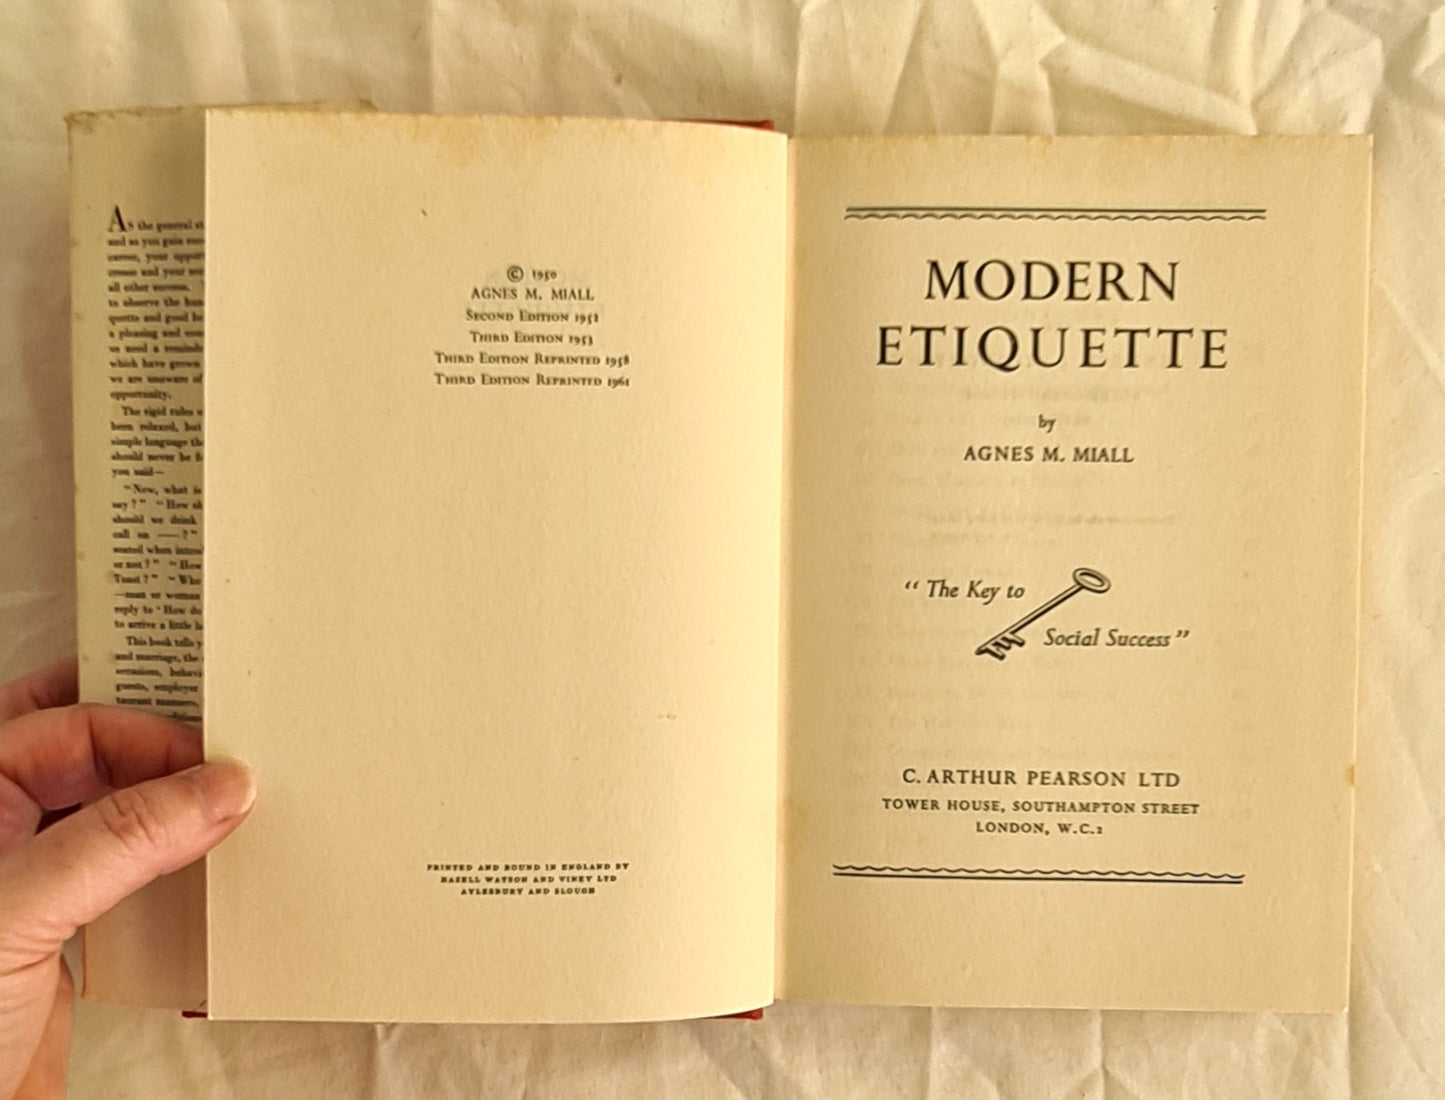 Modern Etiquette by Agnes M. Miall